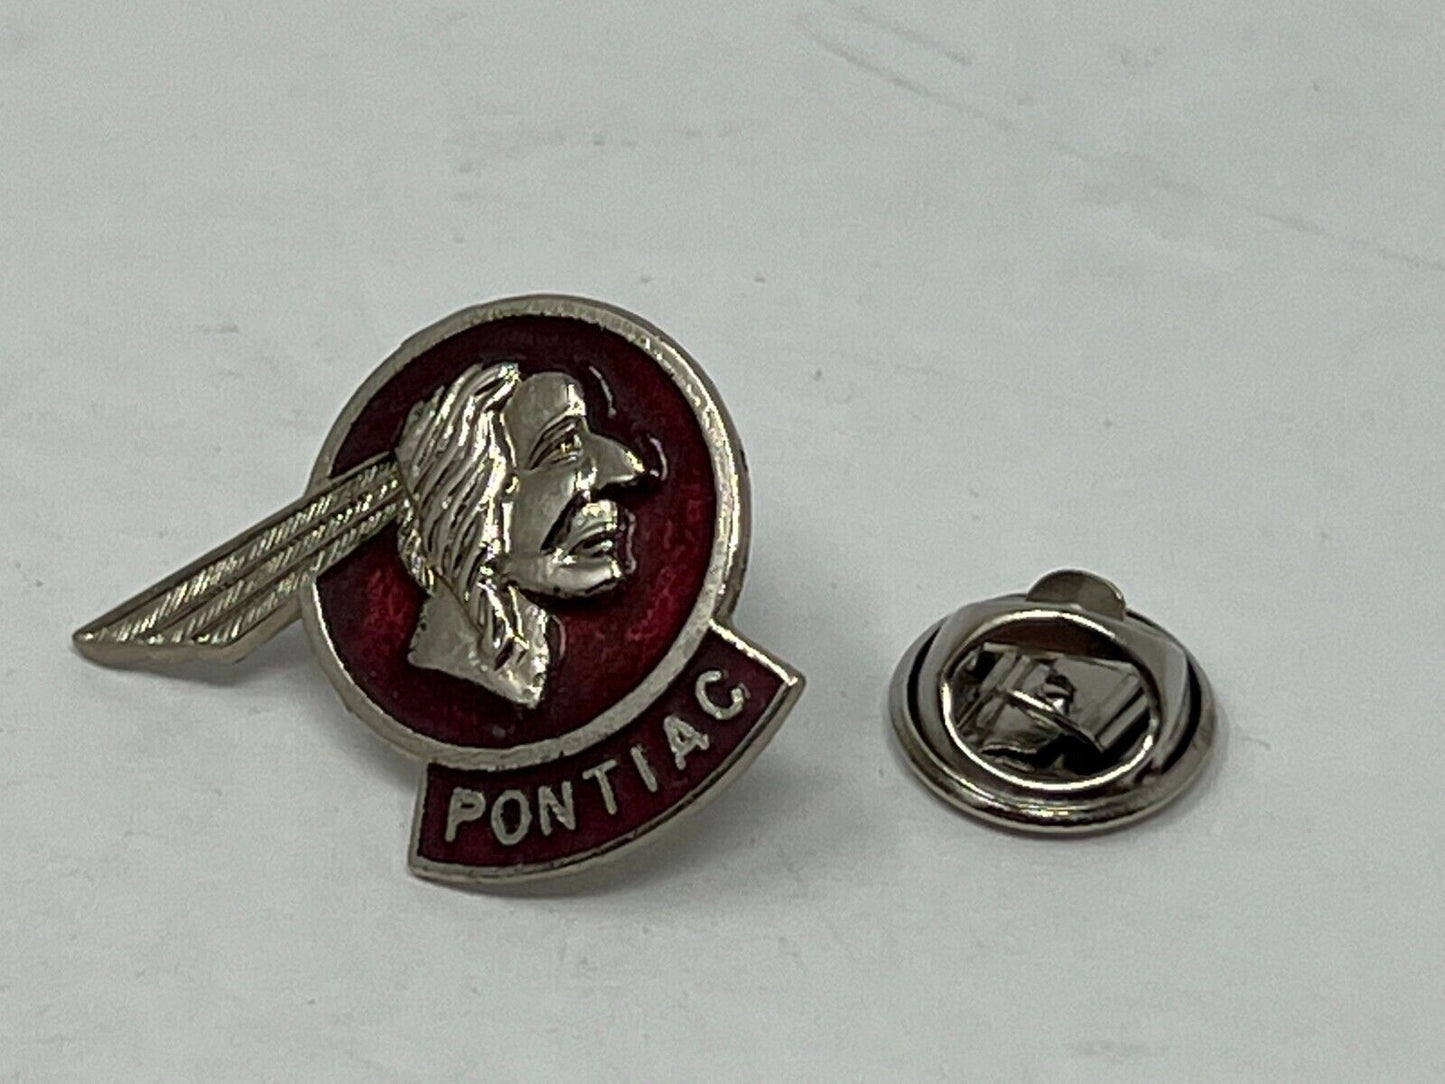 Pontiac Indian Head Automotive Lapel Pin